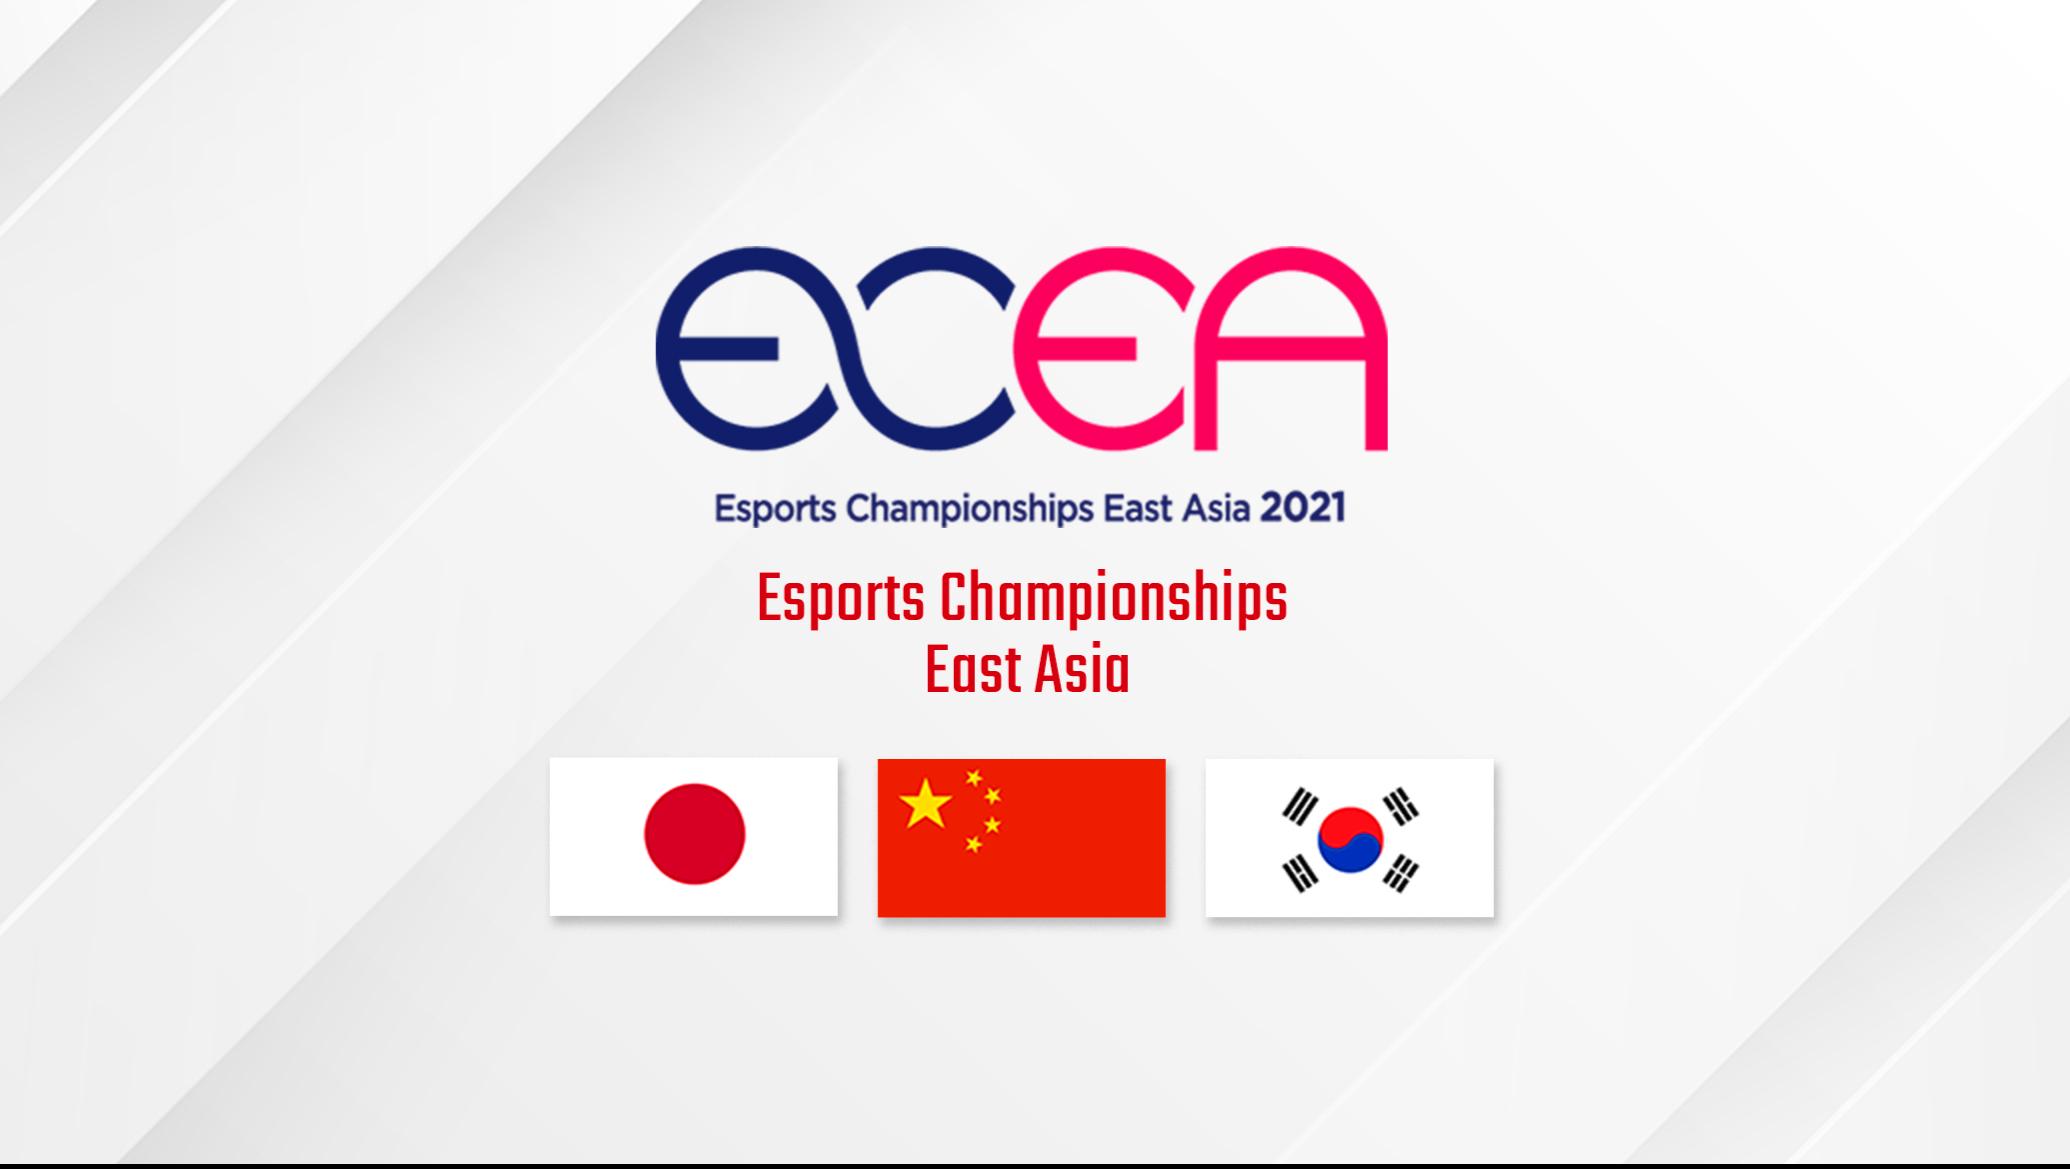 Esports Championships East Asia 2022の見出し画像